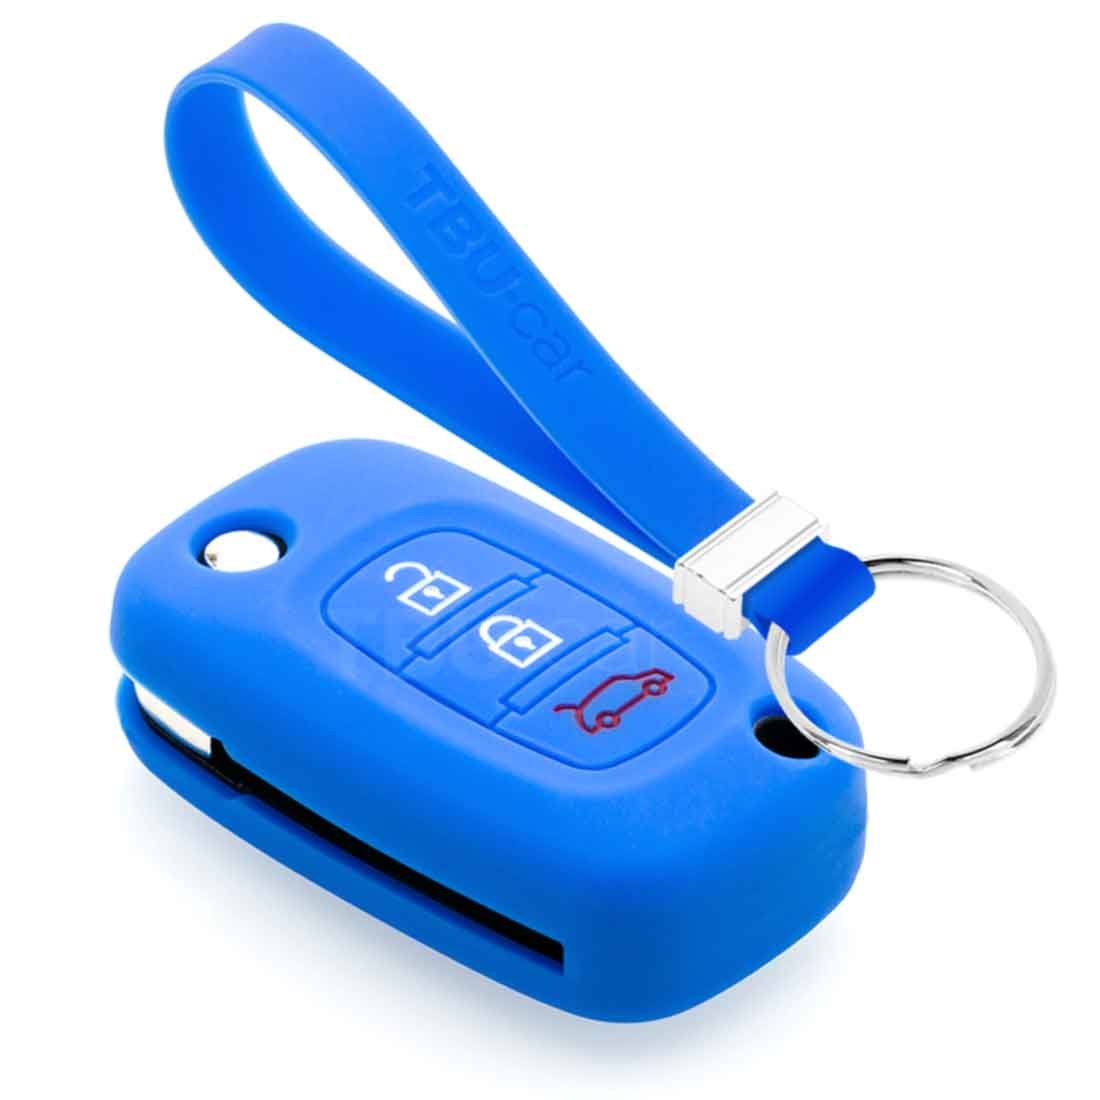 TBU car Smart Capa Silicone Chave do carro - Capa protetora - Tampa remota FOB - Azul